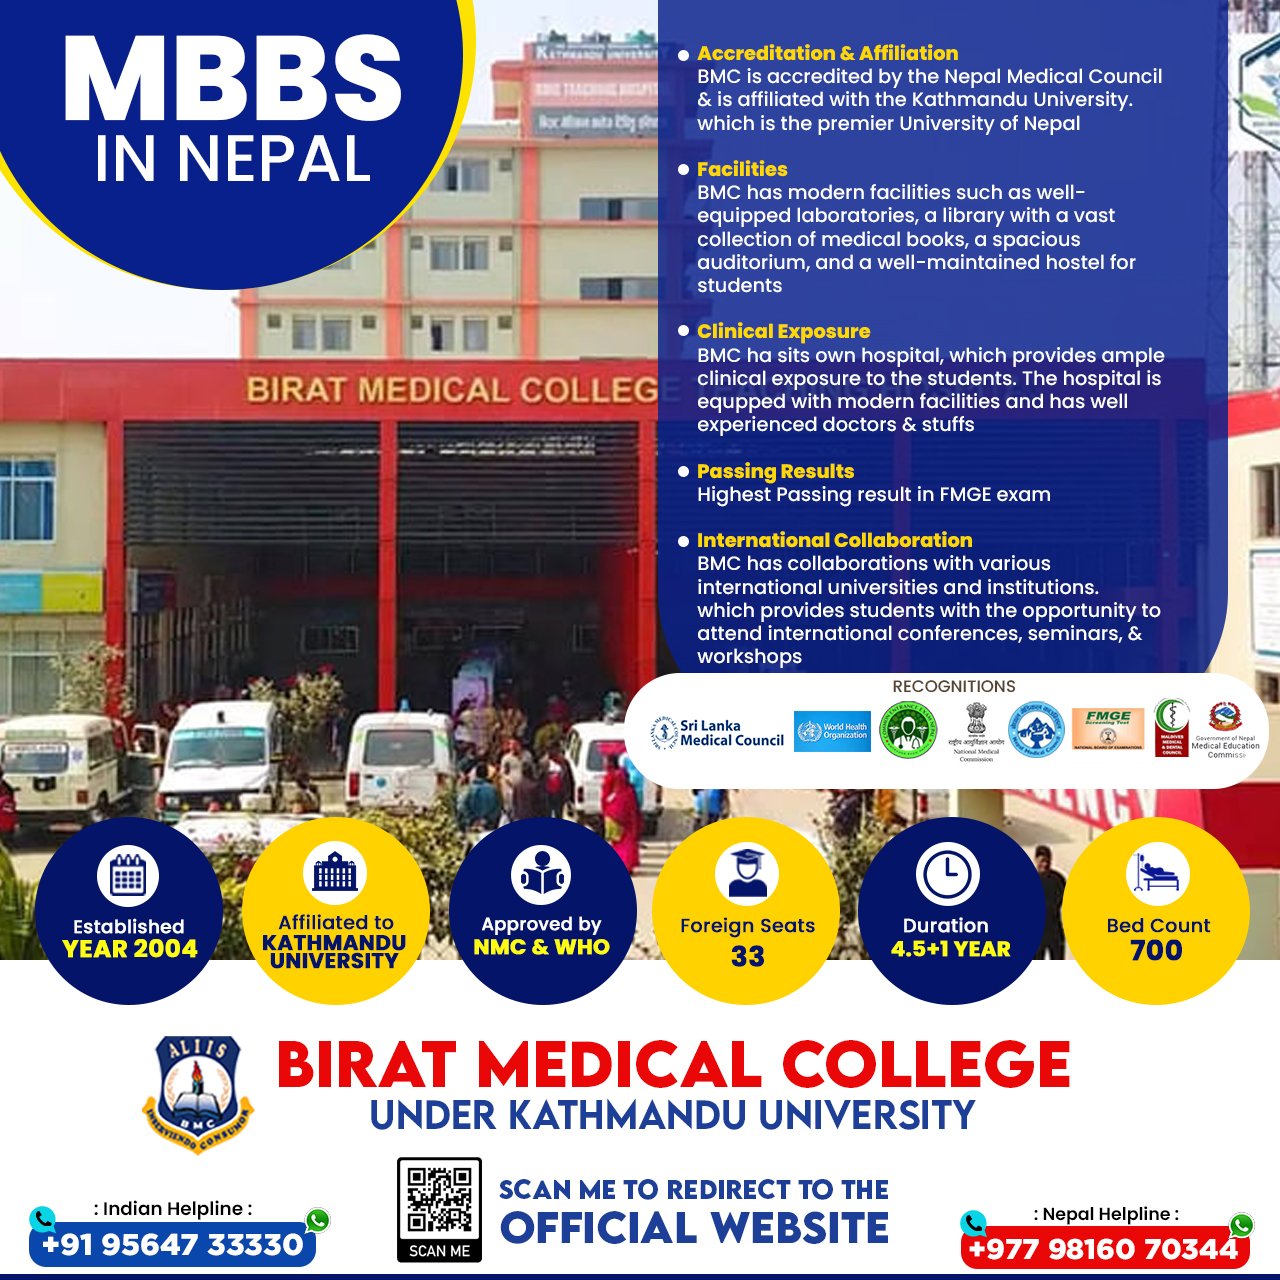 mbbs-in-nepal-at-birat-medical-college-under-kathmandu-university